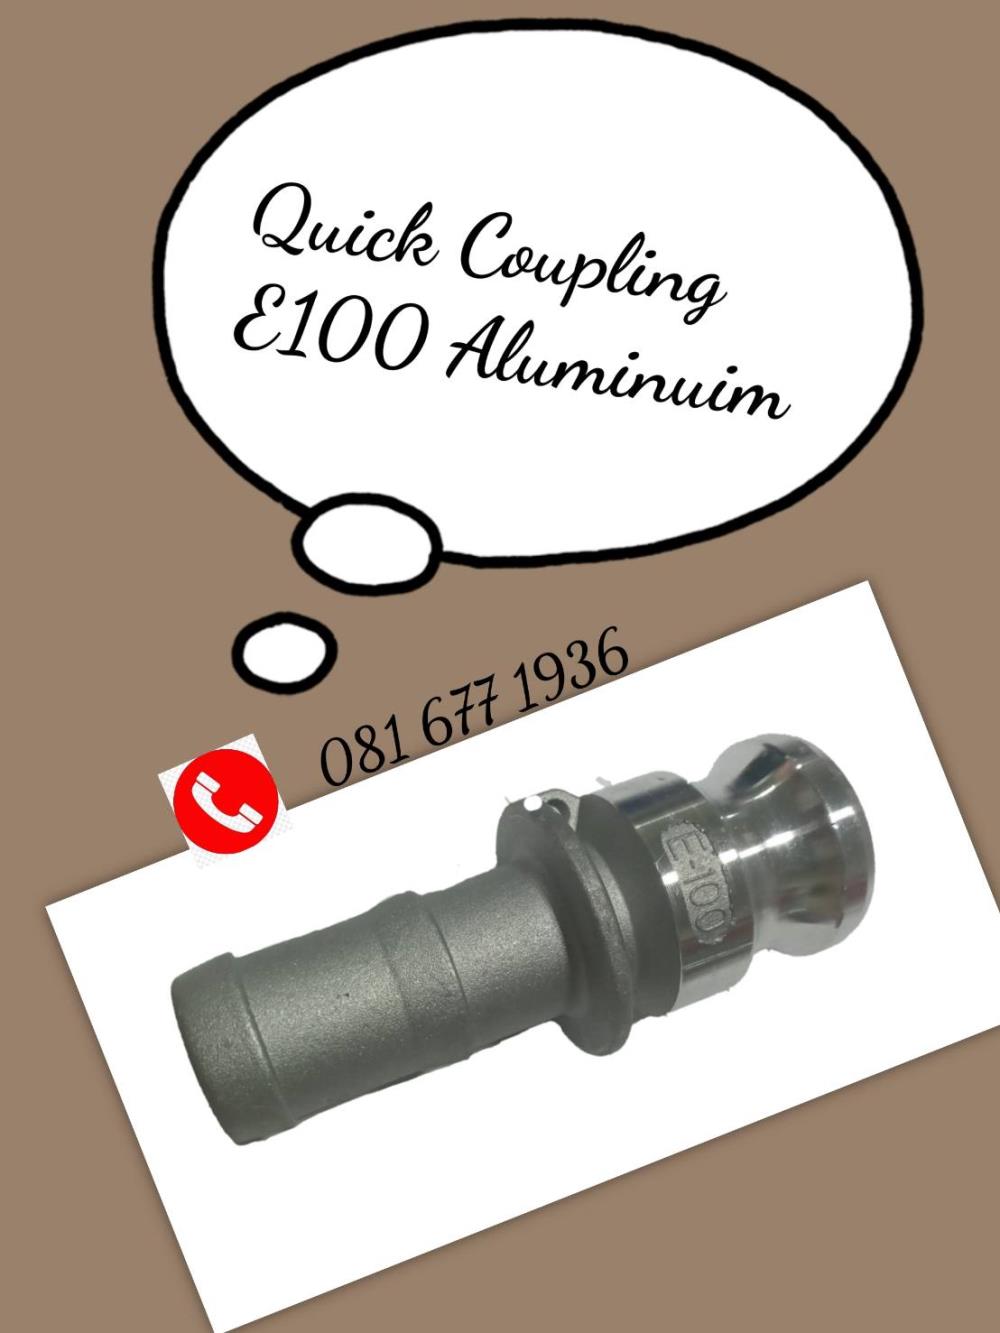 Quick Coupling E100 Aluminuim,Aluminuim,,Pumps, Valves and Accessories/Pipe